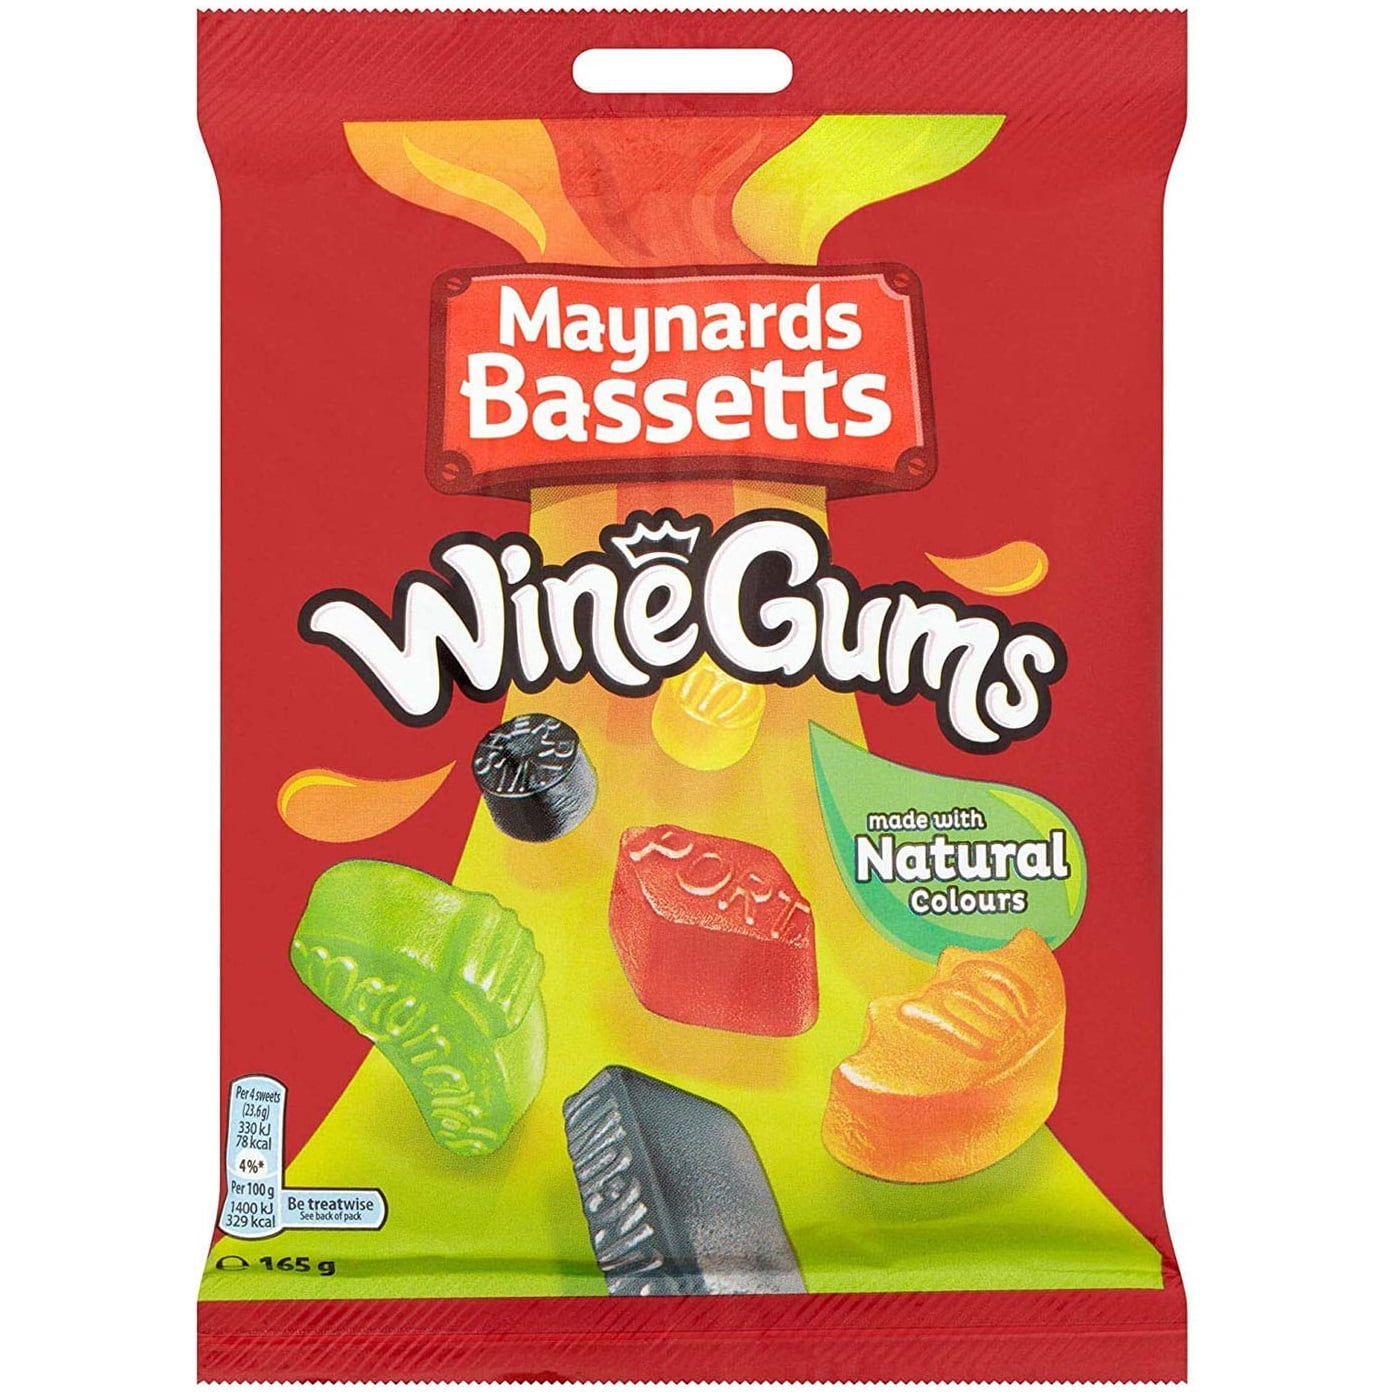 Maynards Bassetts Wine Gums £1 Sweets Bag (165g x 3) 